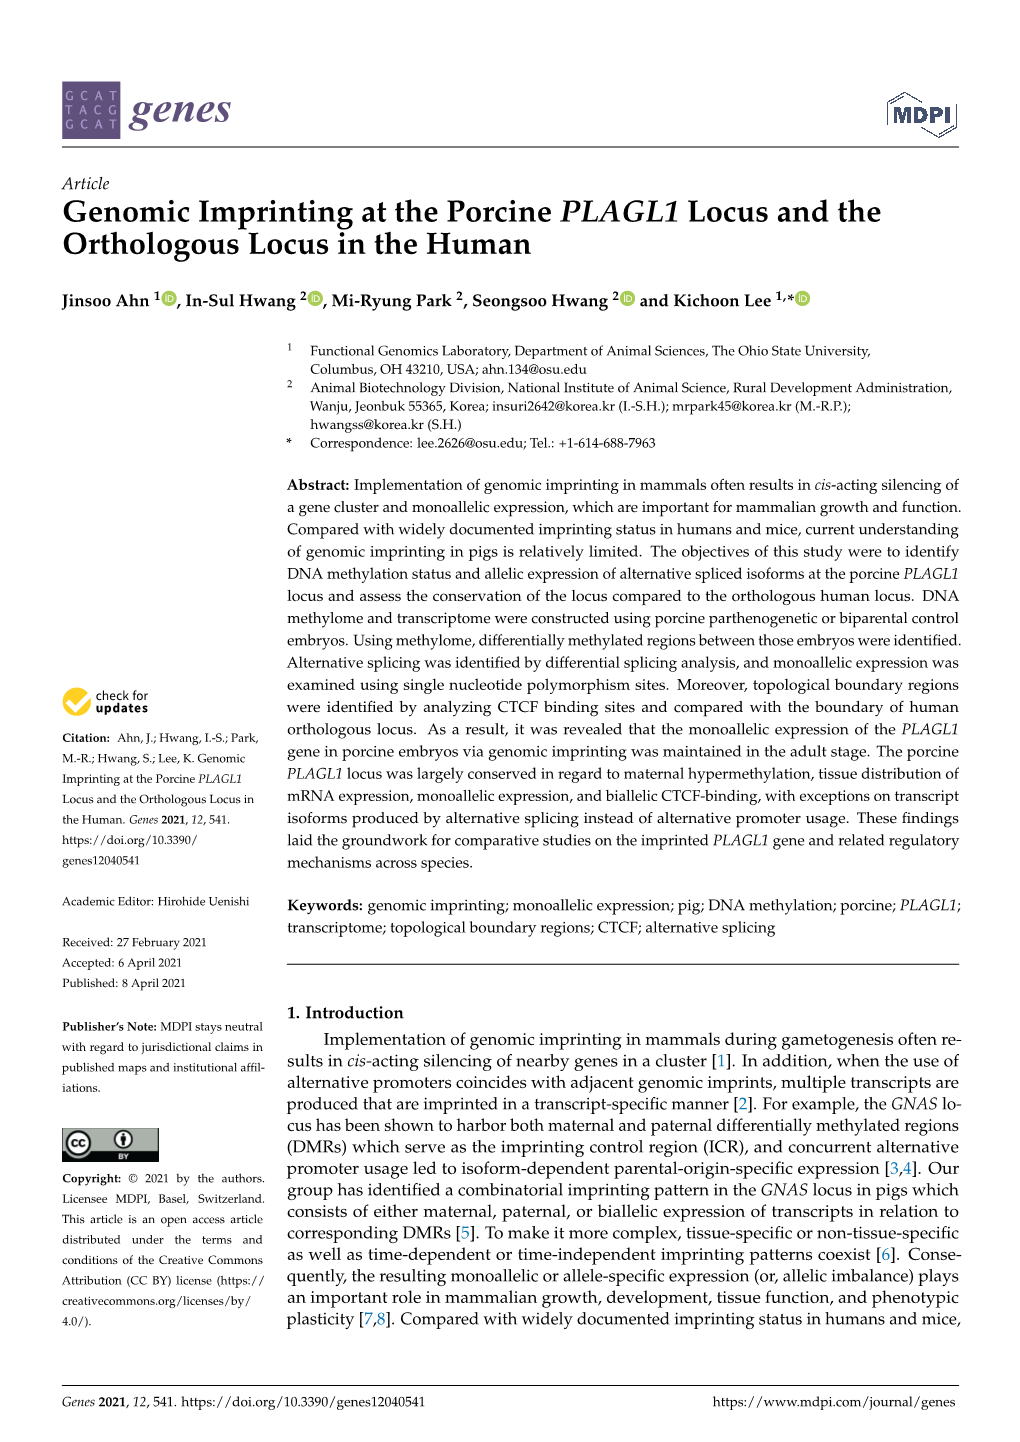 Genomic Imprinting at the Porcine PLAGL1 Locus and the Orthologous Locus in the Human